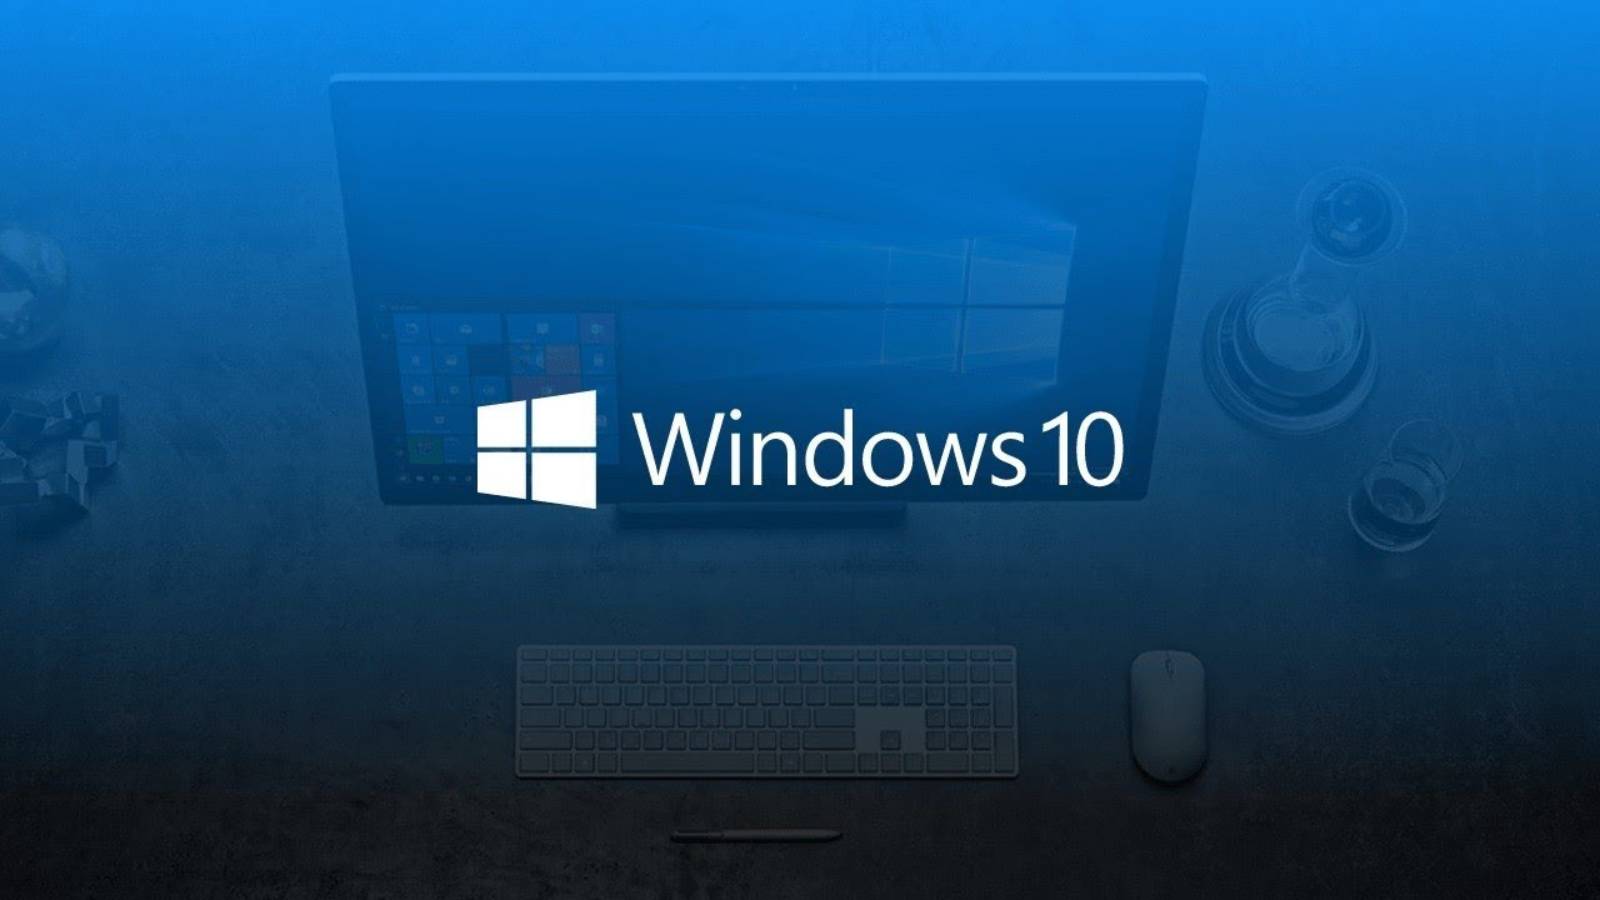 Windows 10 multifunctionale